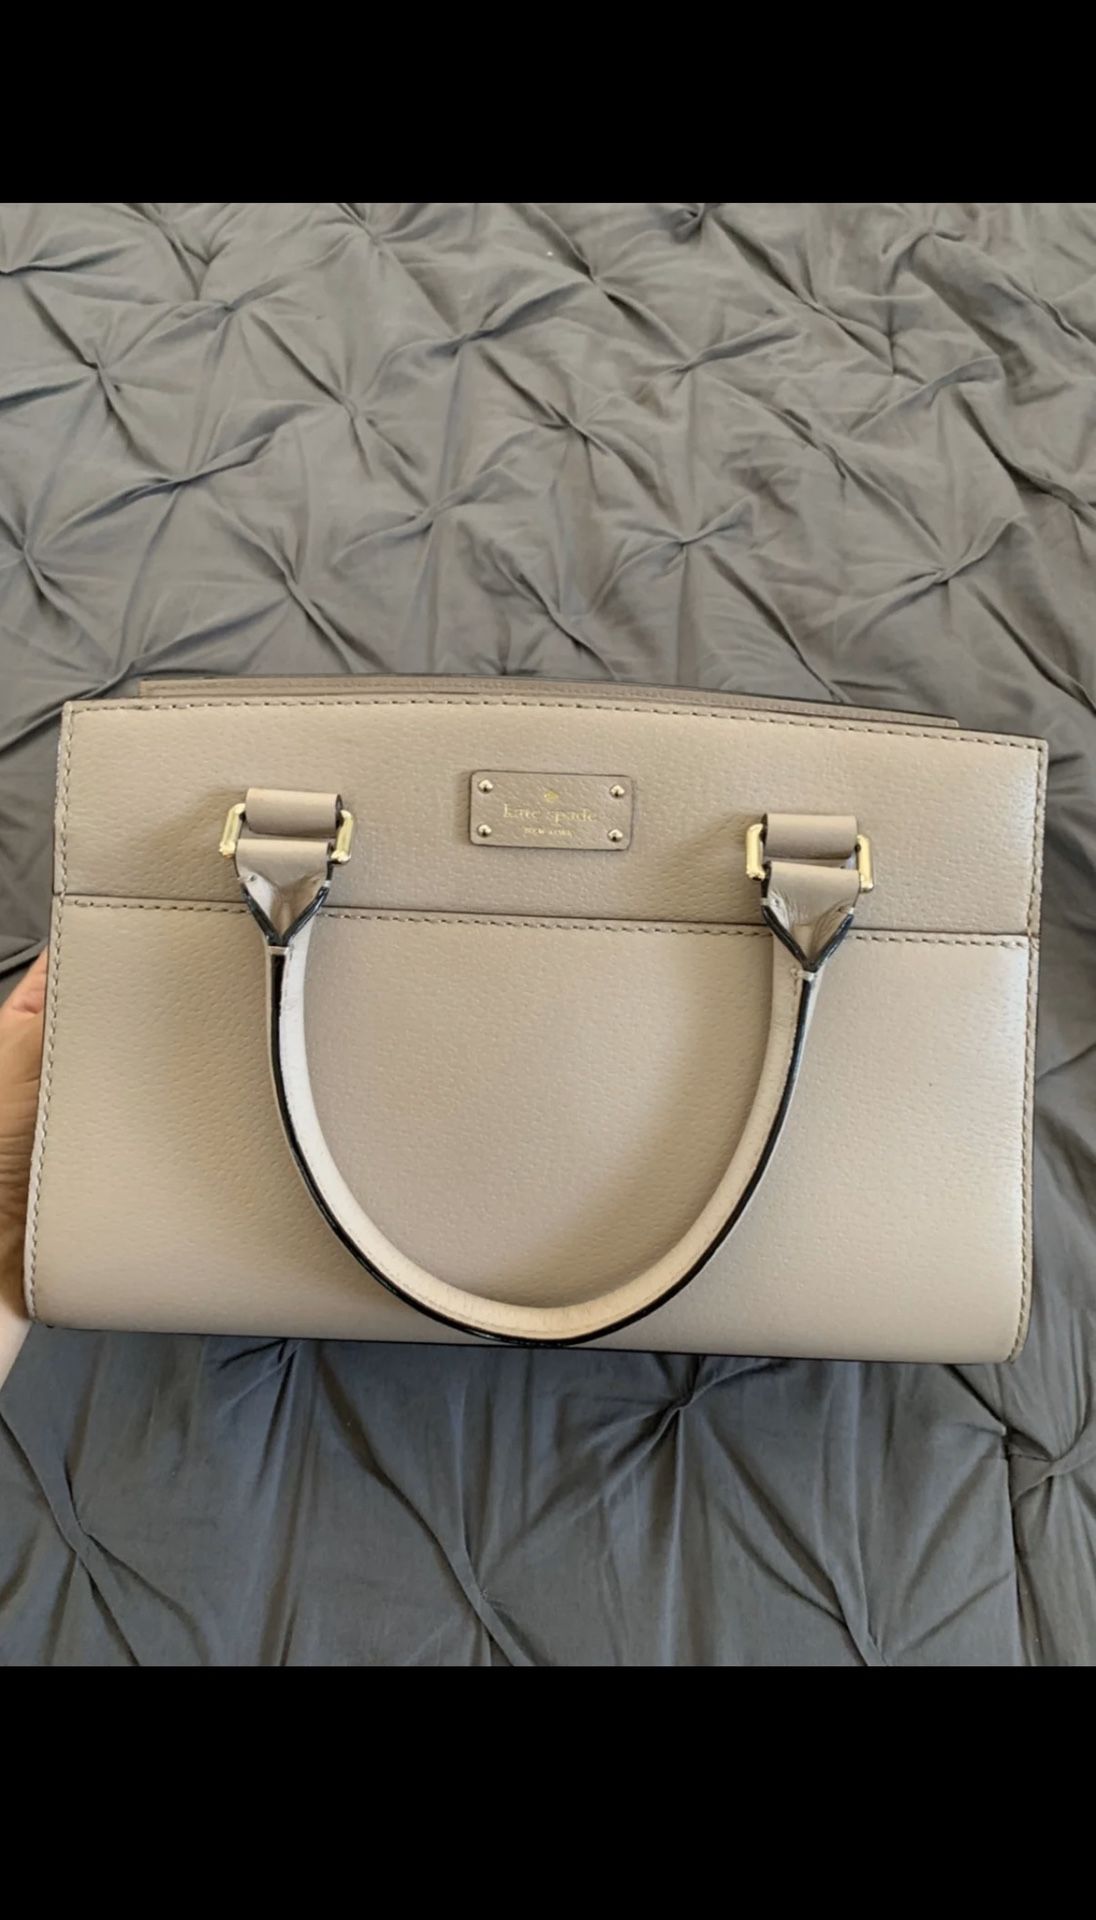 Kate Spade purse and wallet bundle